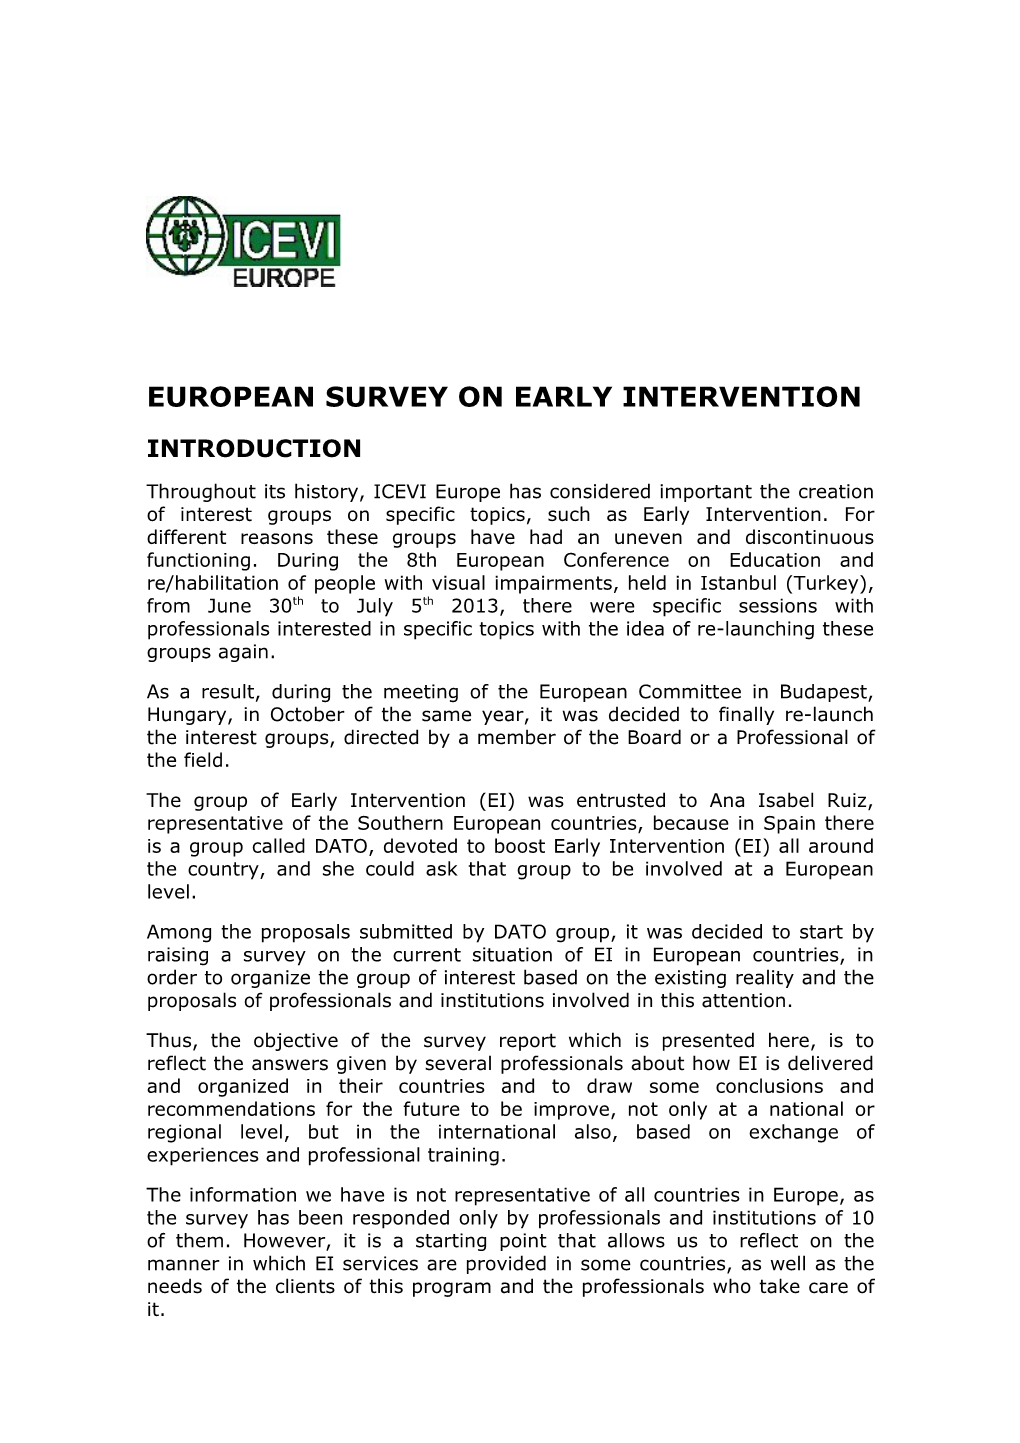 European Survey on Early Intervention